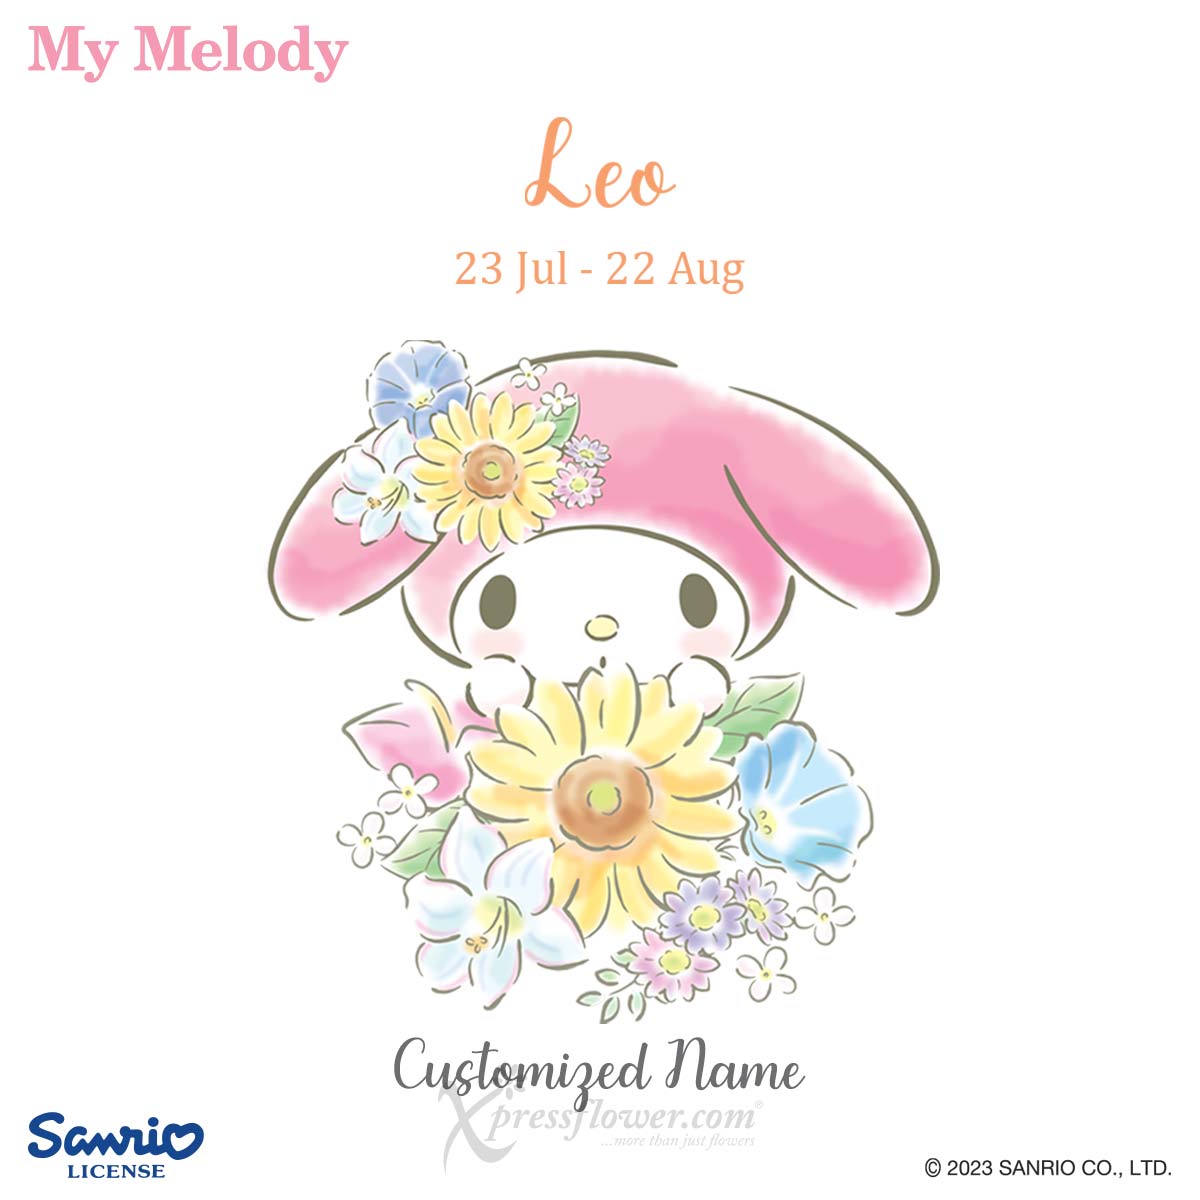 SNMG2304 Sunny Leo (Sunflower with My Melody Personalised Mug - Leo) 1c